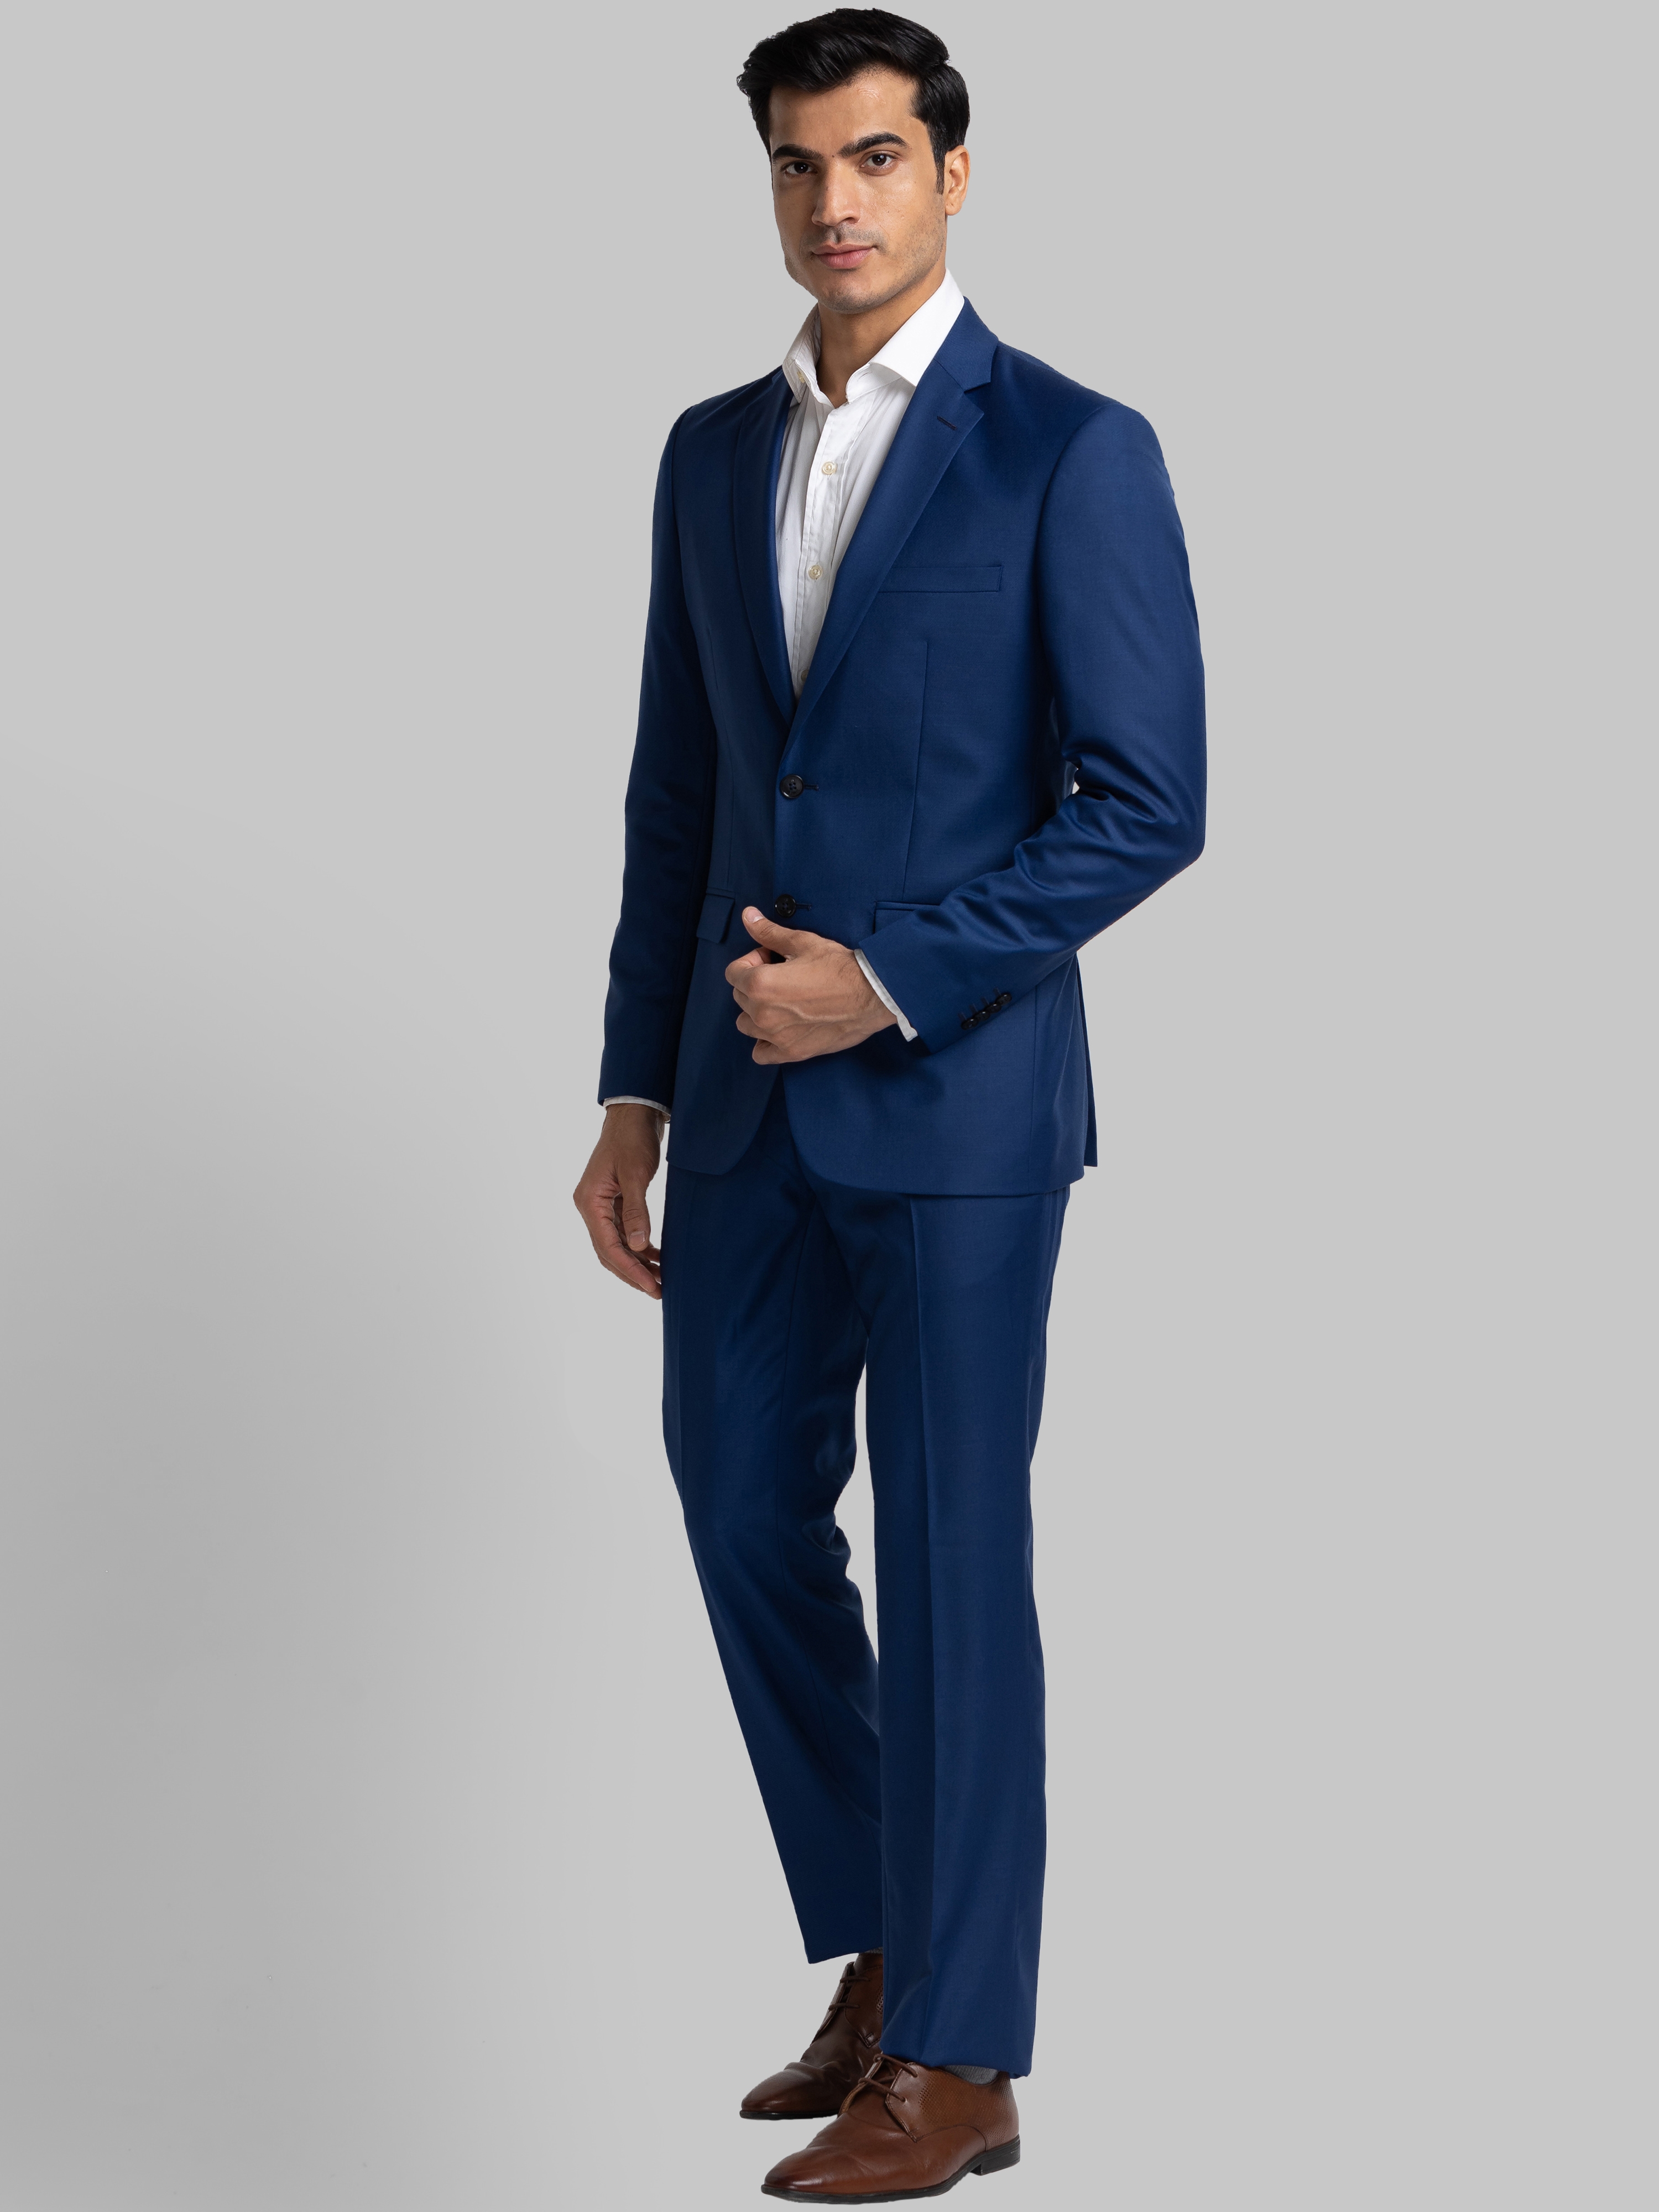 Arya Agencies - Raymond Wholesaler - Raymond Maroon 3piece suit. | Facebook